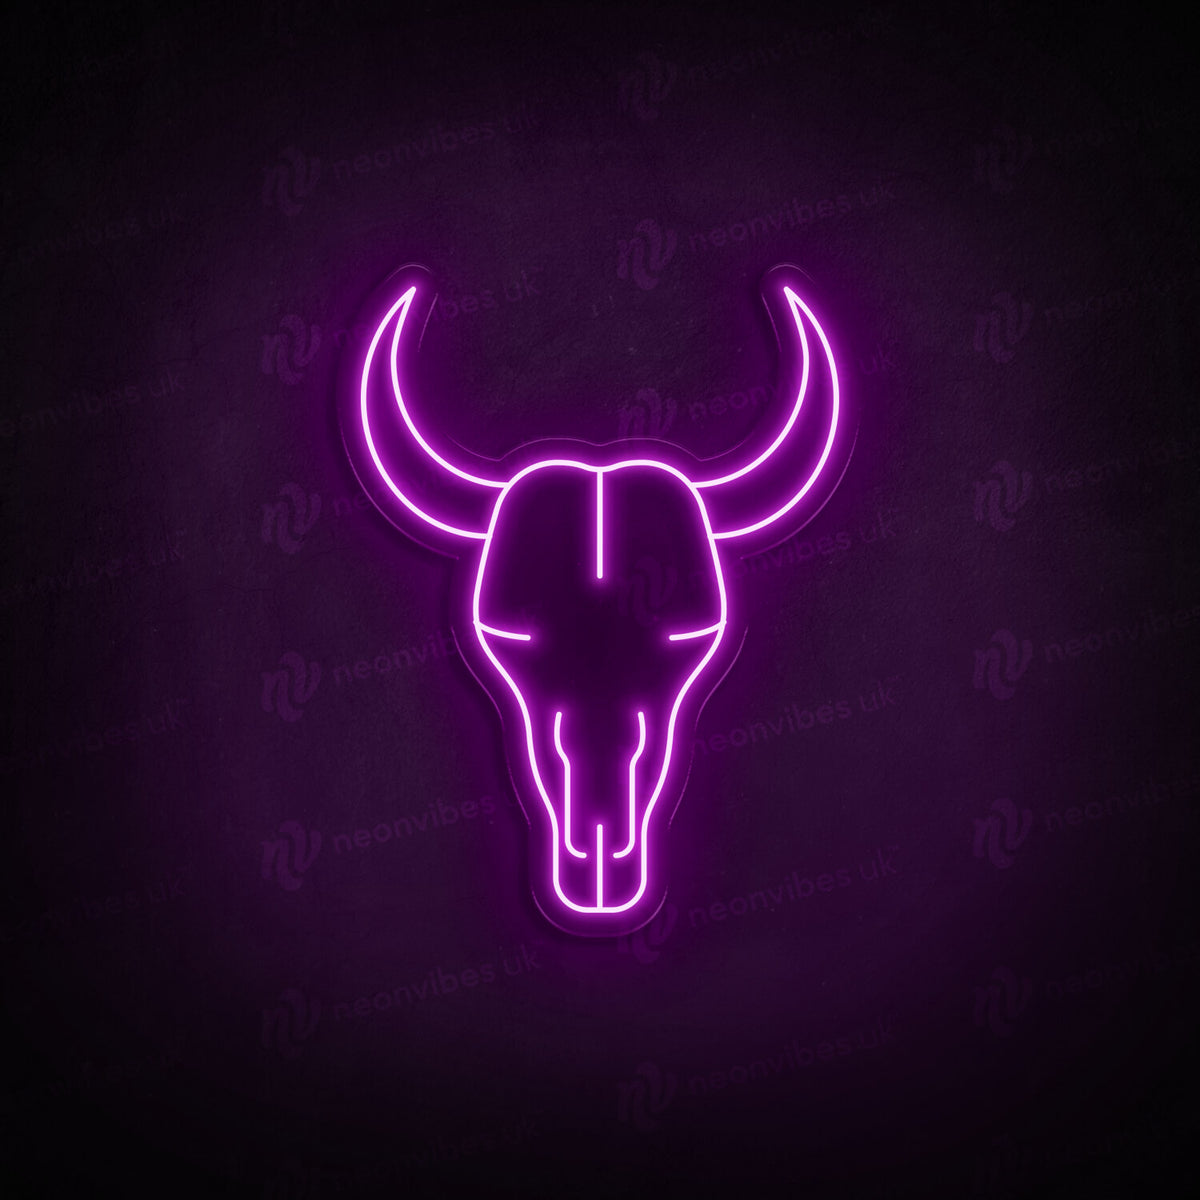 Bull Head neon sign